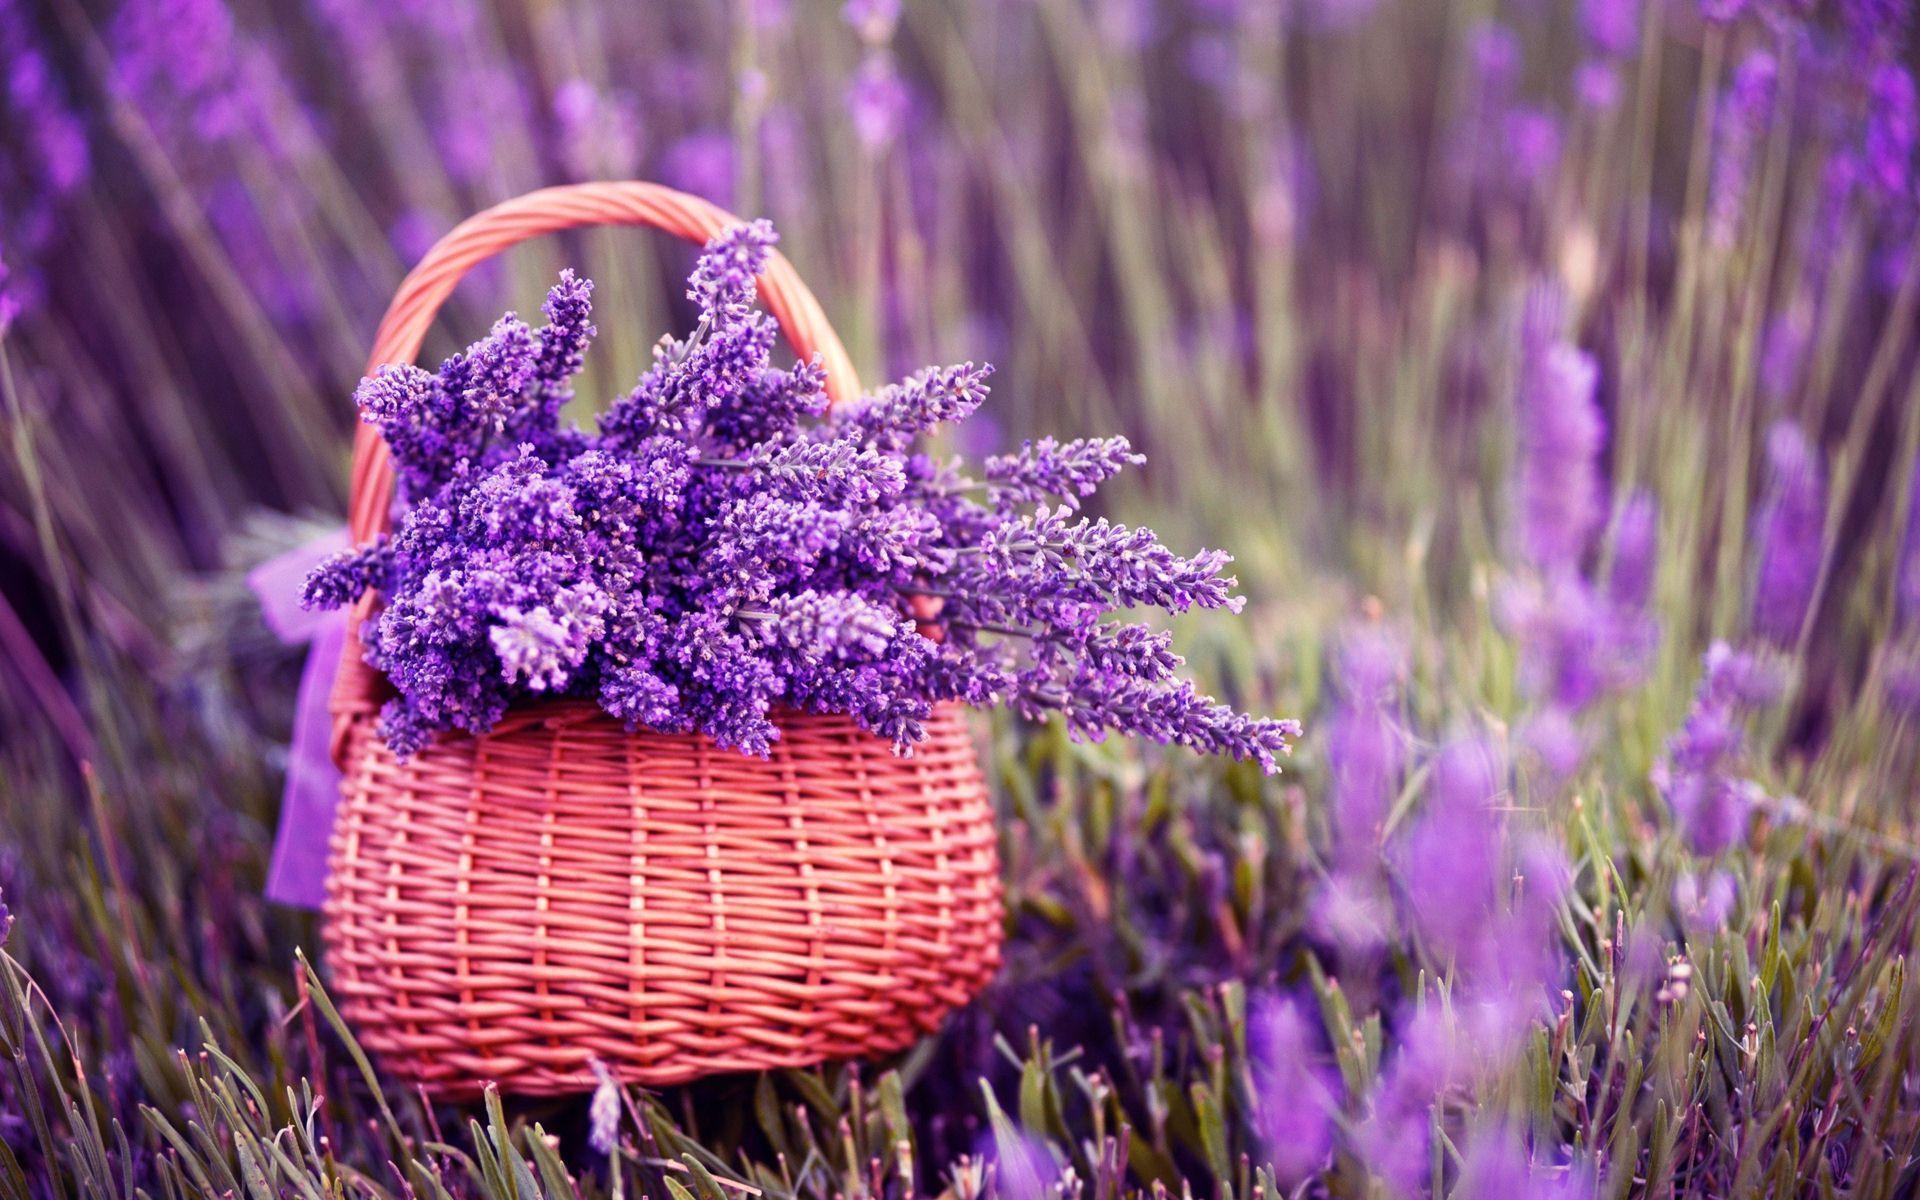 Purple Lavender Flowers In Basket Image. HD Wallpaper Image